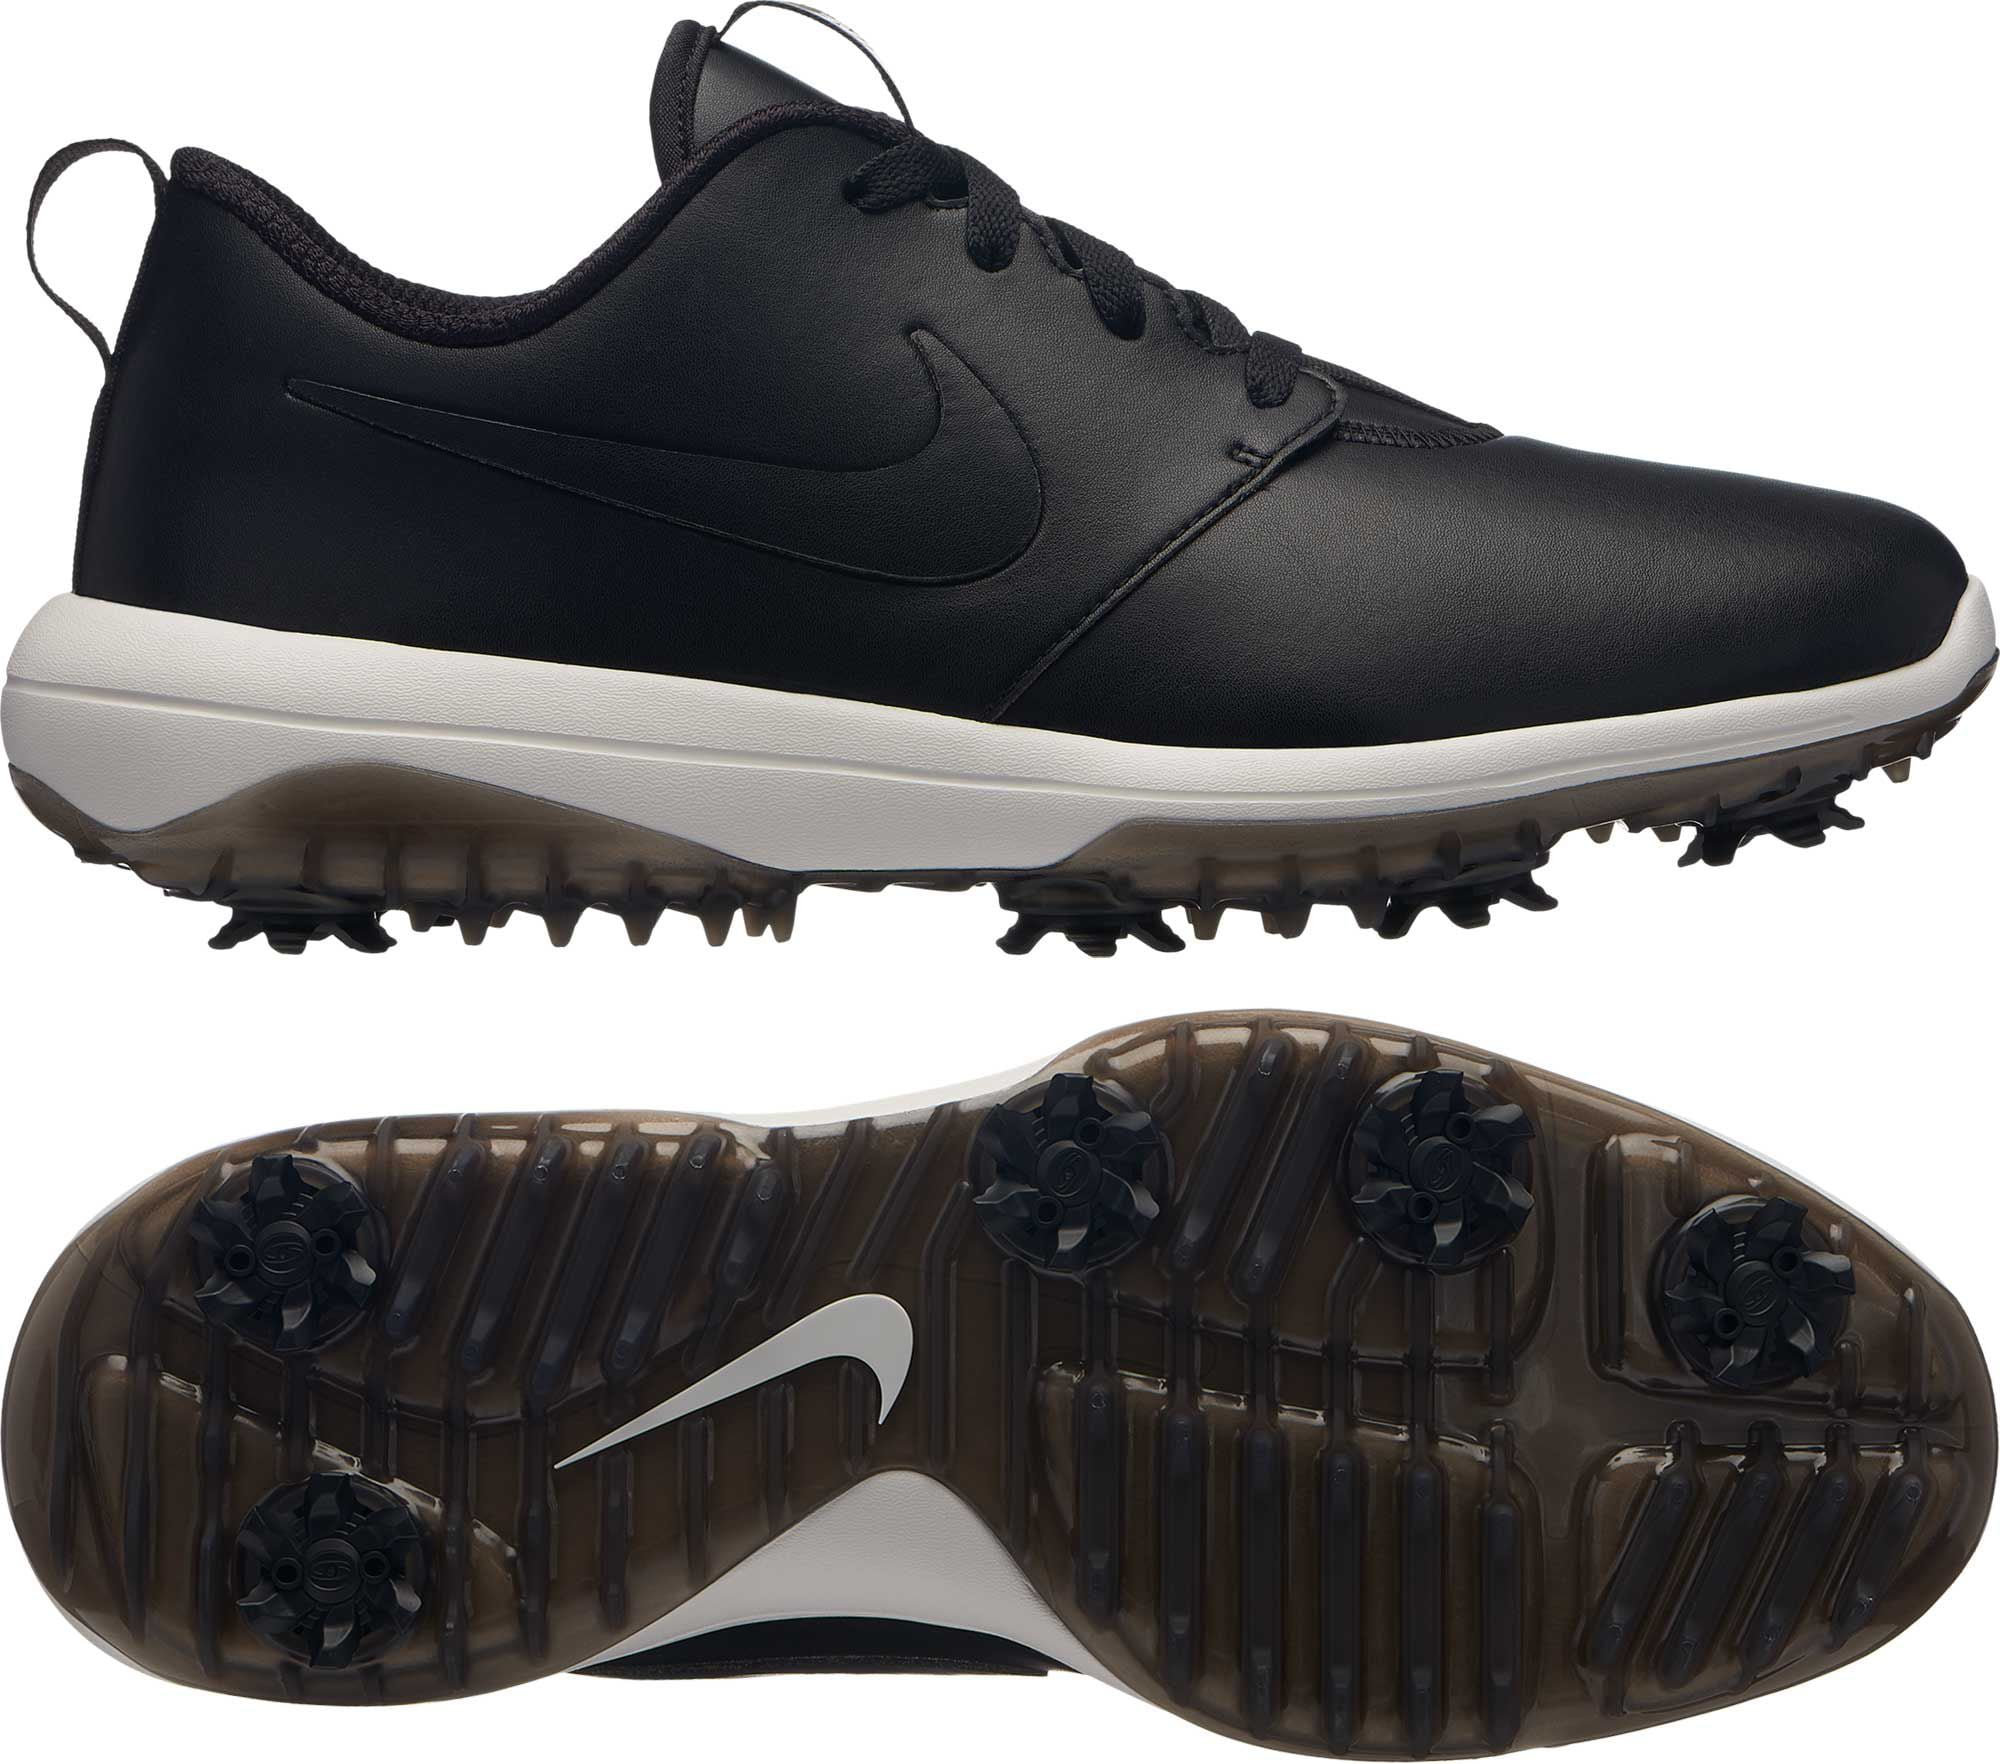 Nike - Nike Men's Roshe G Tour Golf Shoes - Walmart.com - Walmart.com